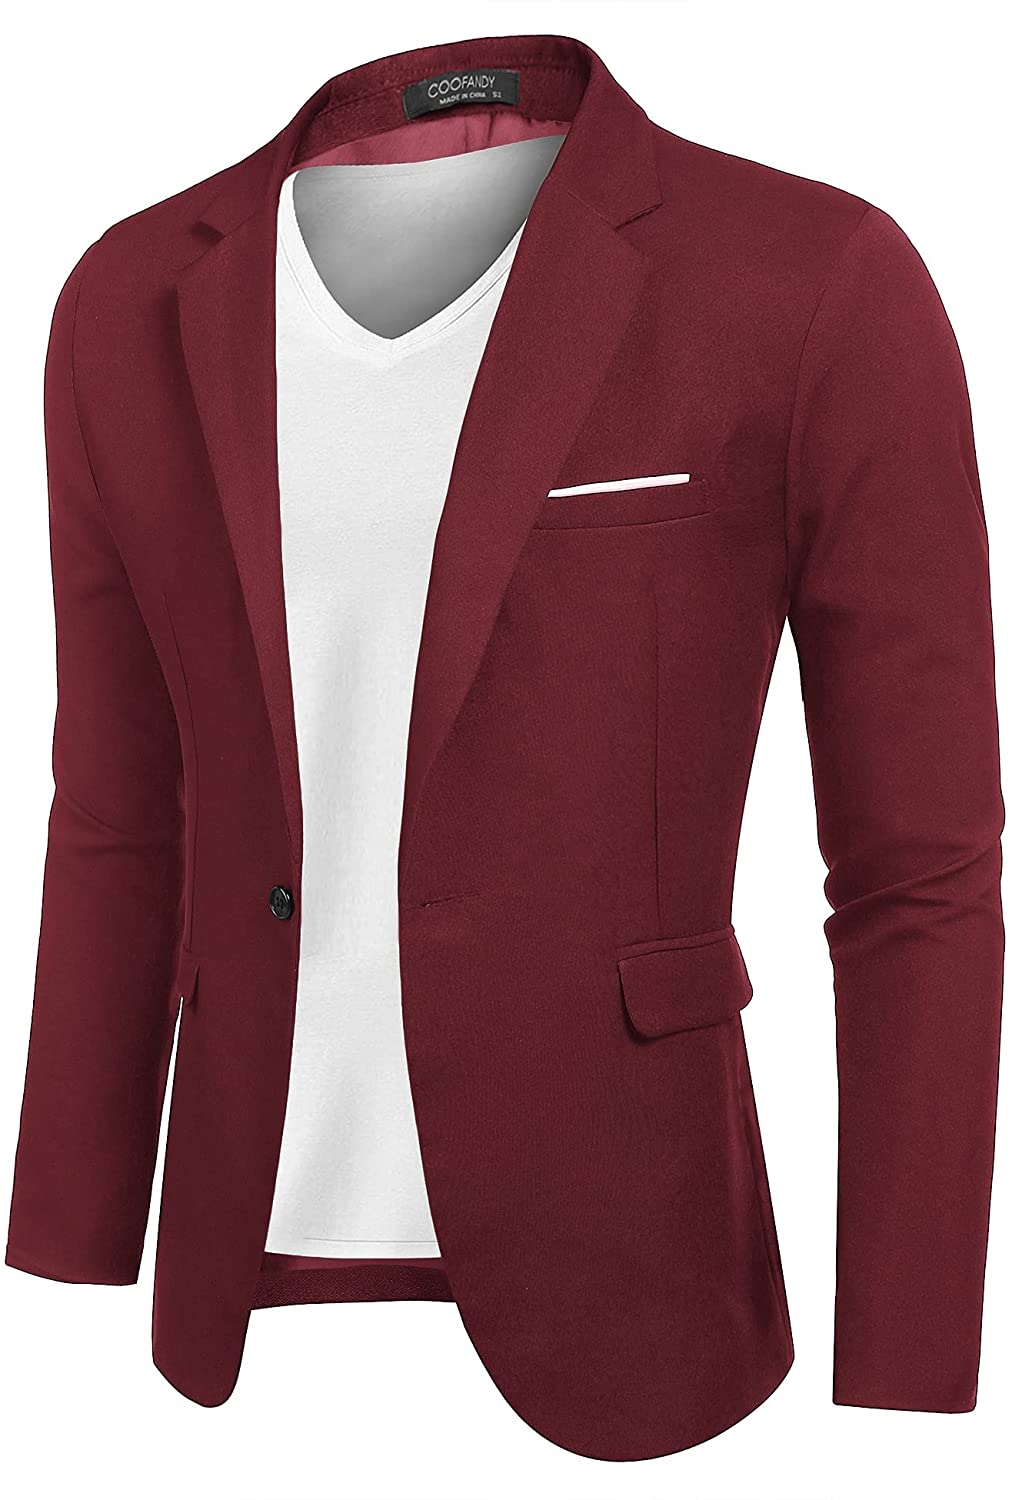 Coofandy Men's Casual Suit Blazer Jackets Lightweight Sports Coats